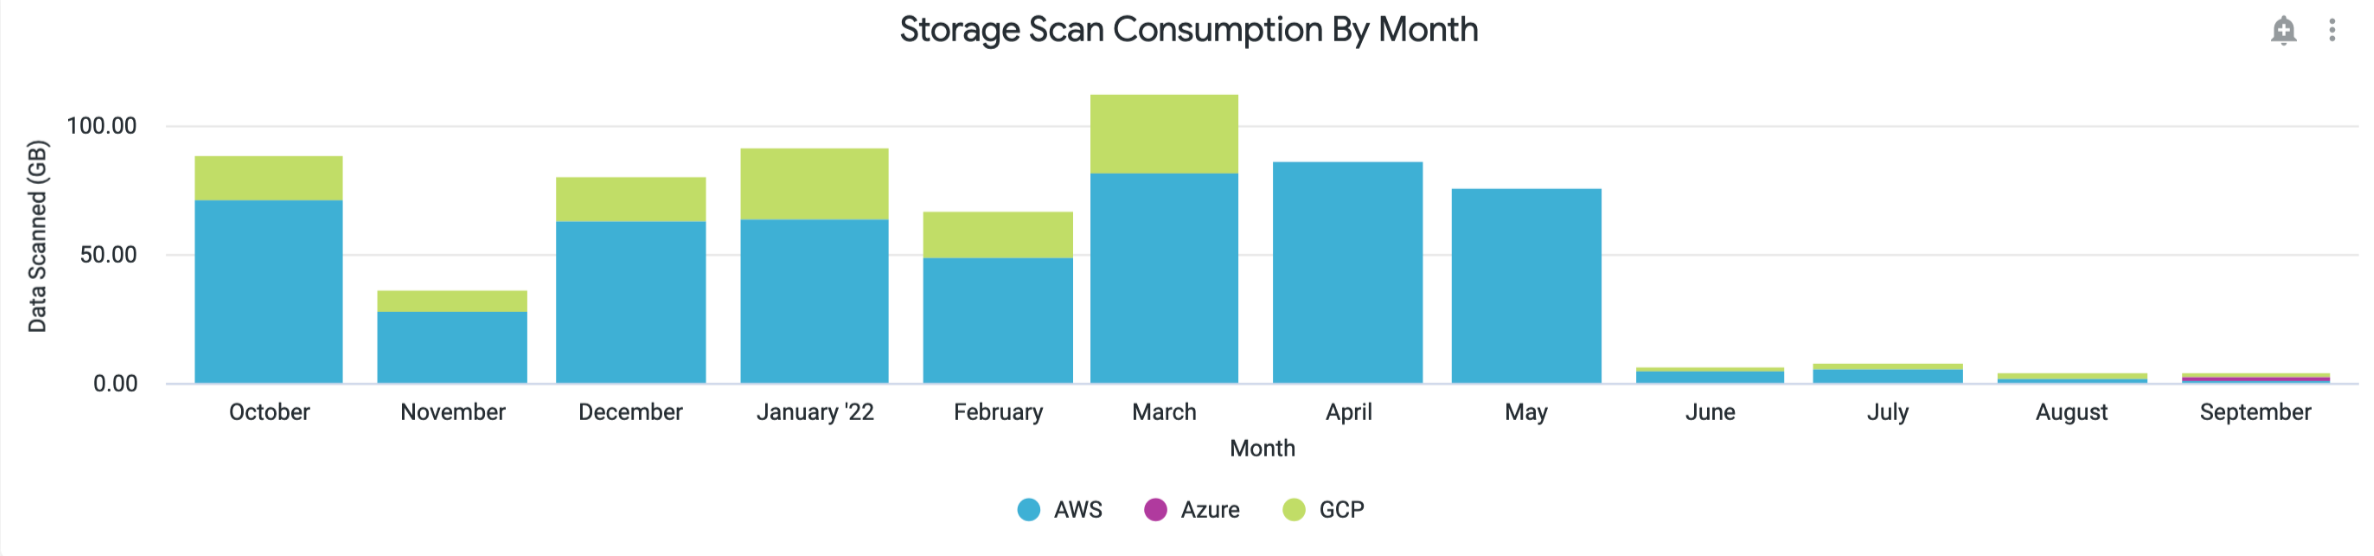 Netskope-DEM-Digital-Experience-Managment-Storage-Consumption-Scan-By-Month-Widget.png